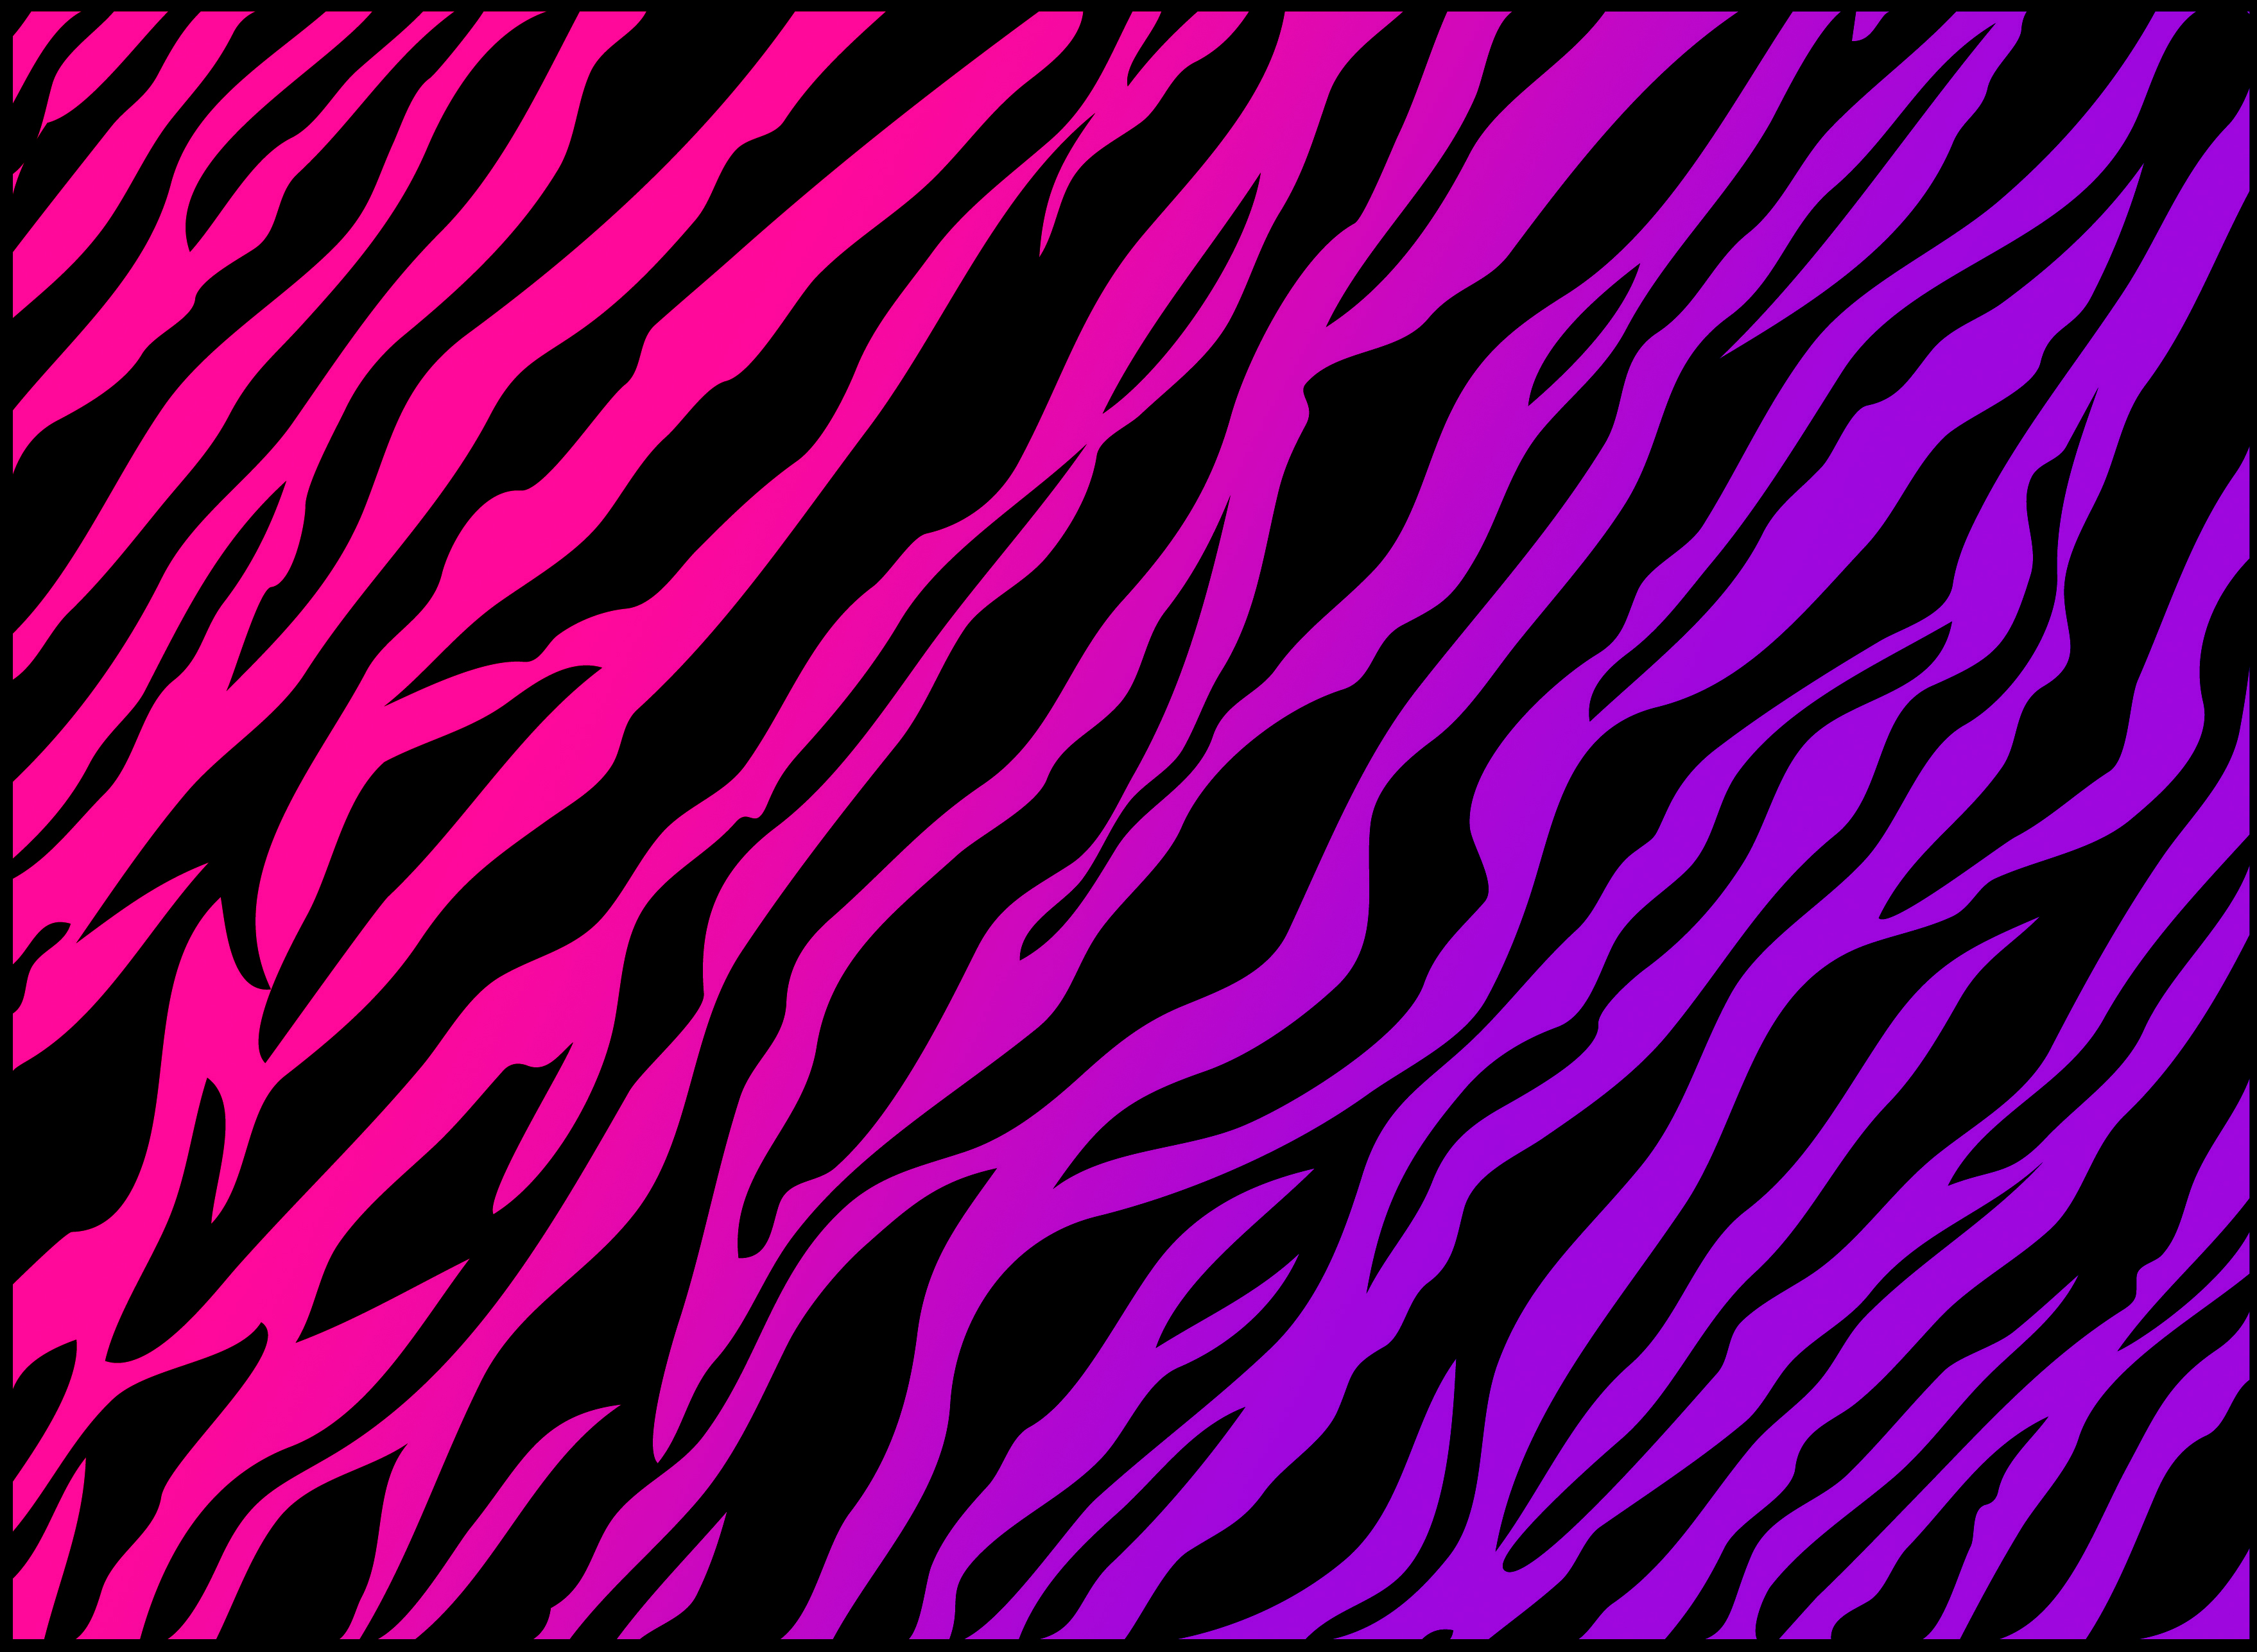 Zebra Print Wallpaper Desktop 3516x2574